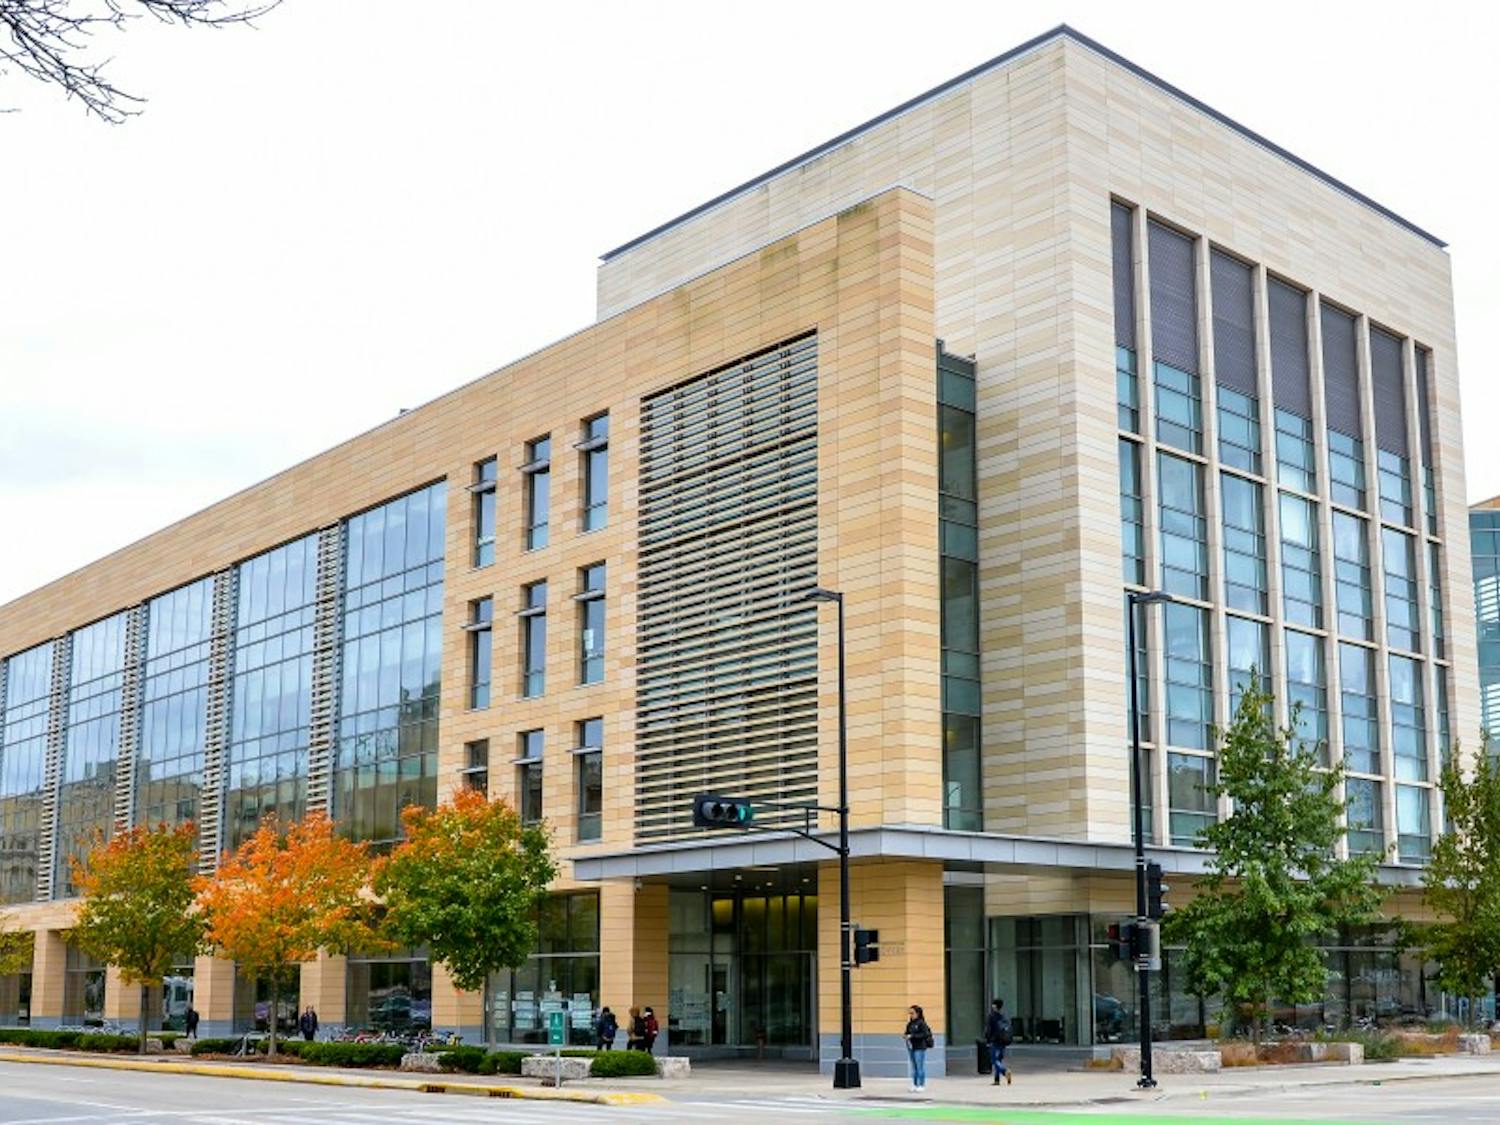 Washington University sues WARF over kidney drug patents